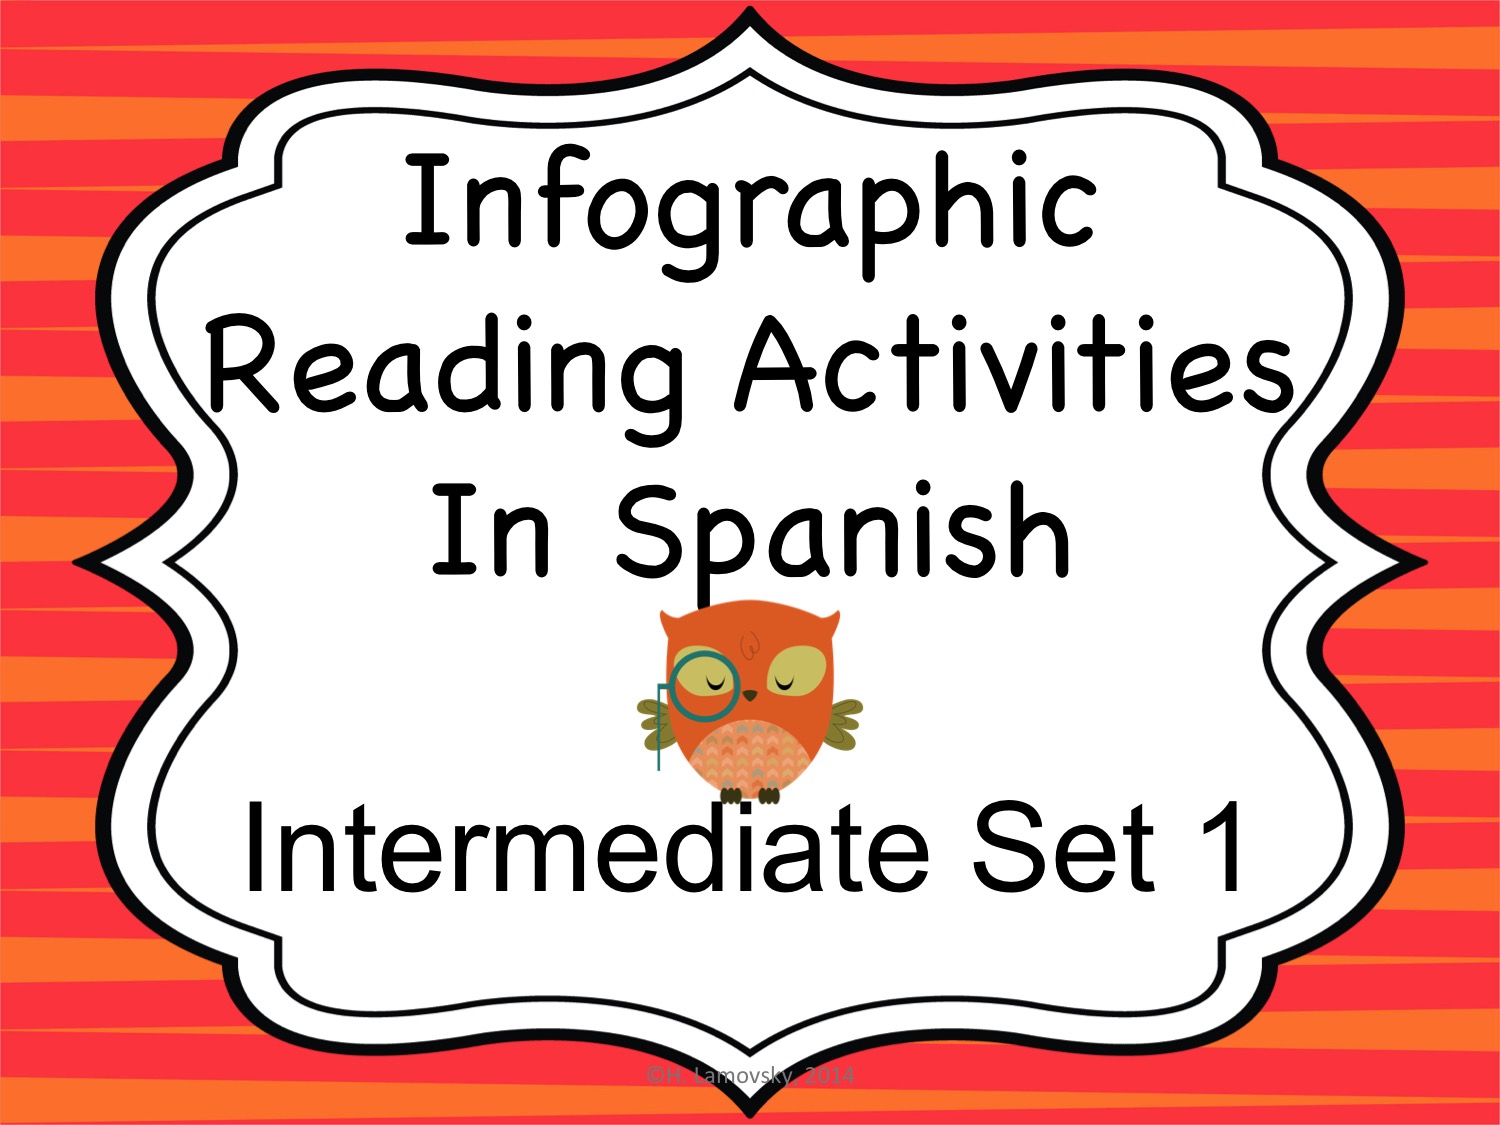 Spanish Infographic Reading Activities - Intermediate